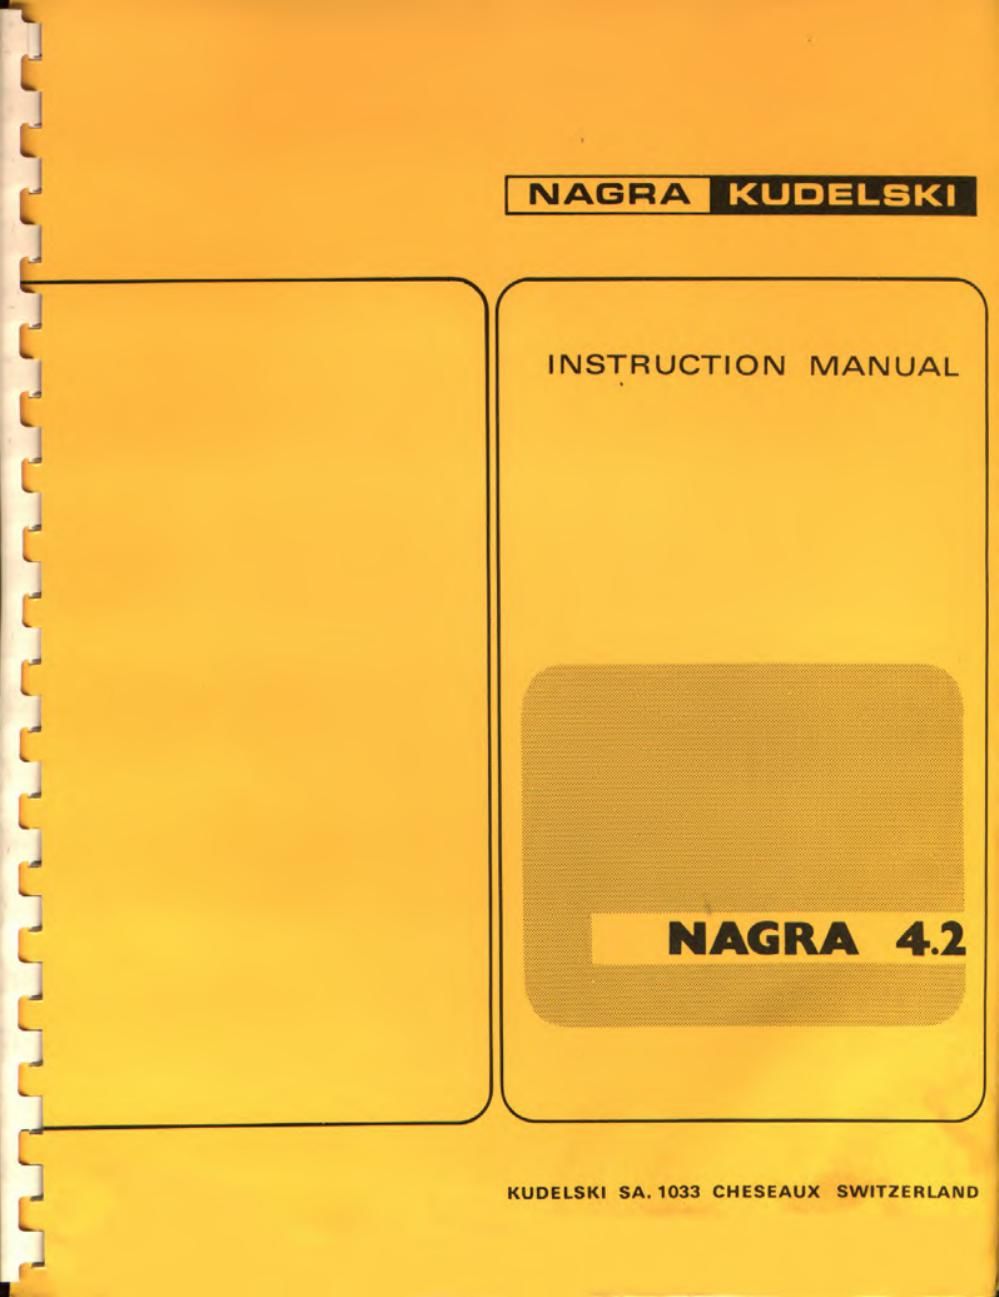 nagra 4.2 owners manual